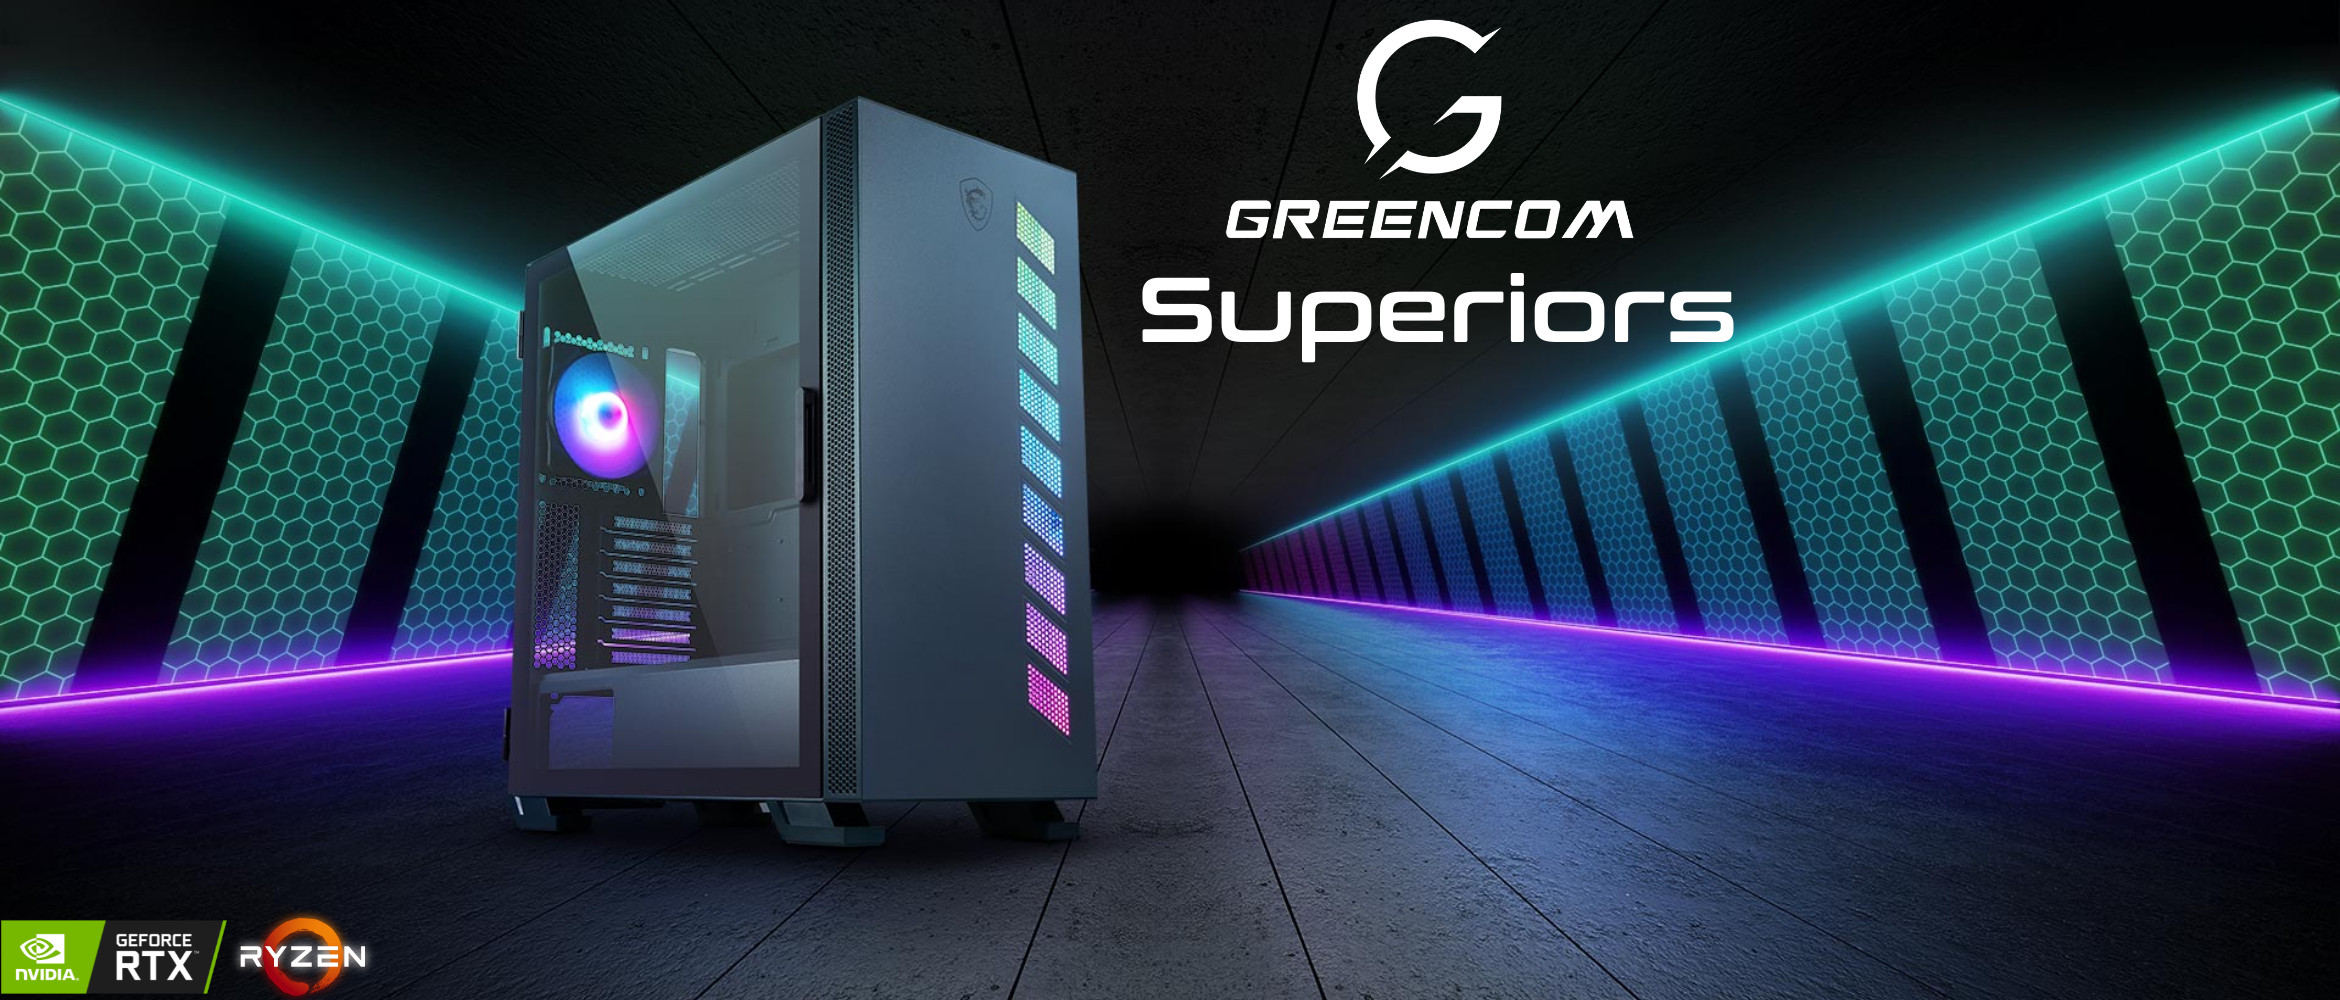 Greencom Superiors